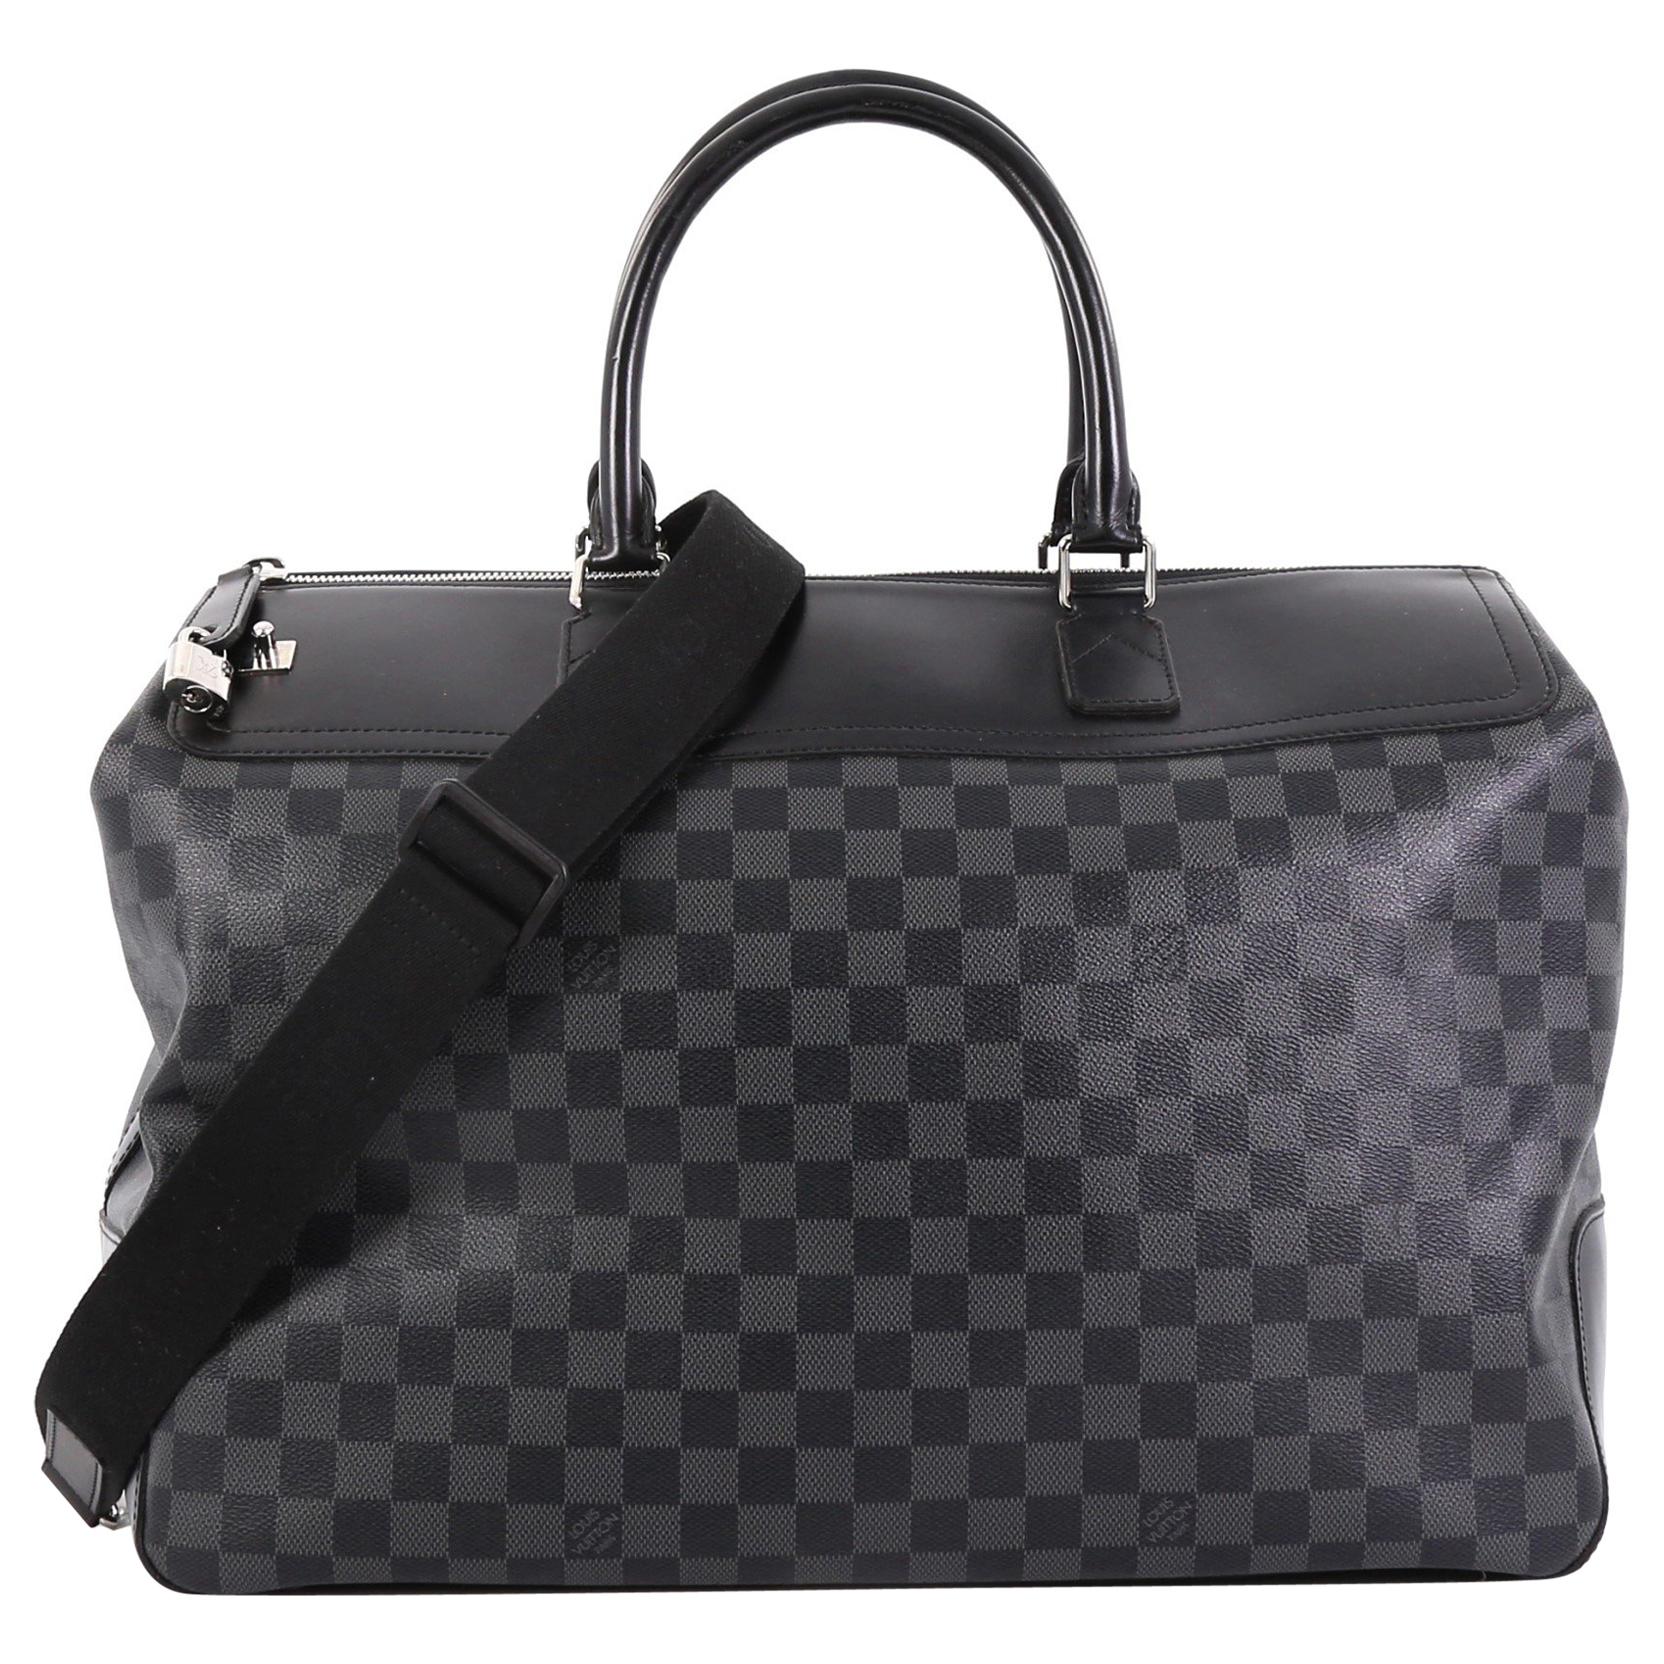 Louis Vuitton Neo Greenwich Handbag Damier Graphite